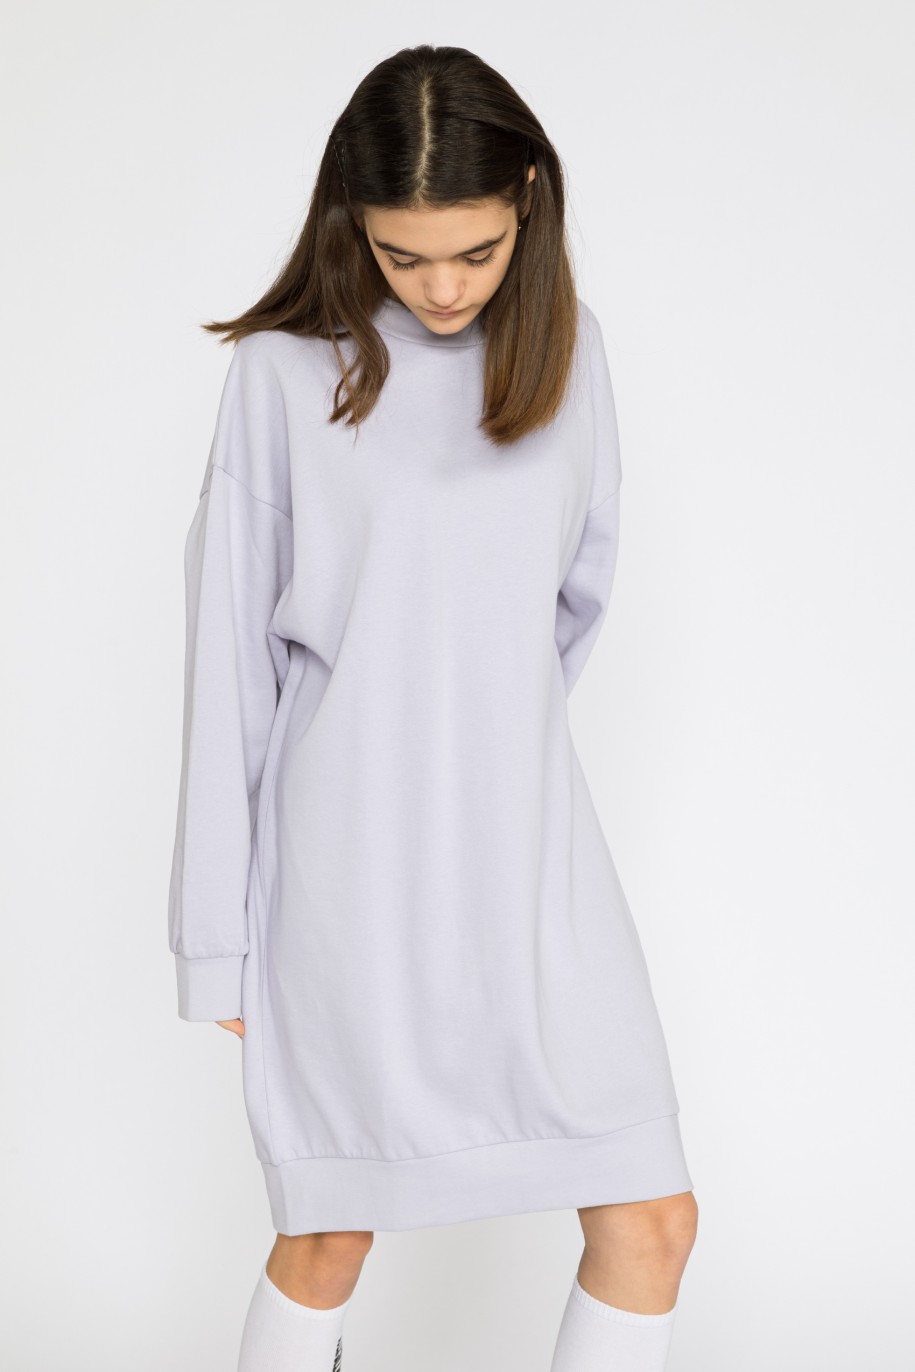 Liliowa bluzowa sukienka  SNOWBOARD - 32318